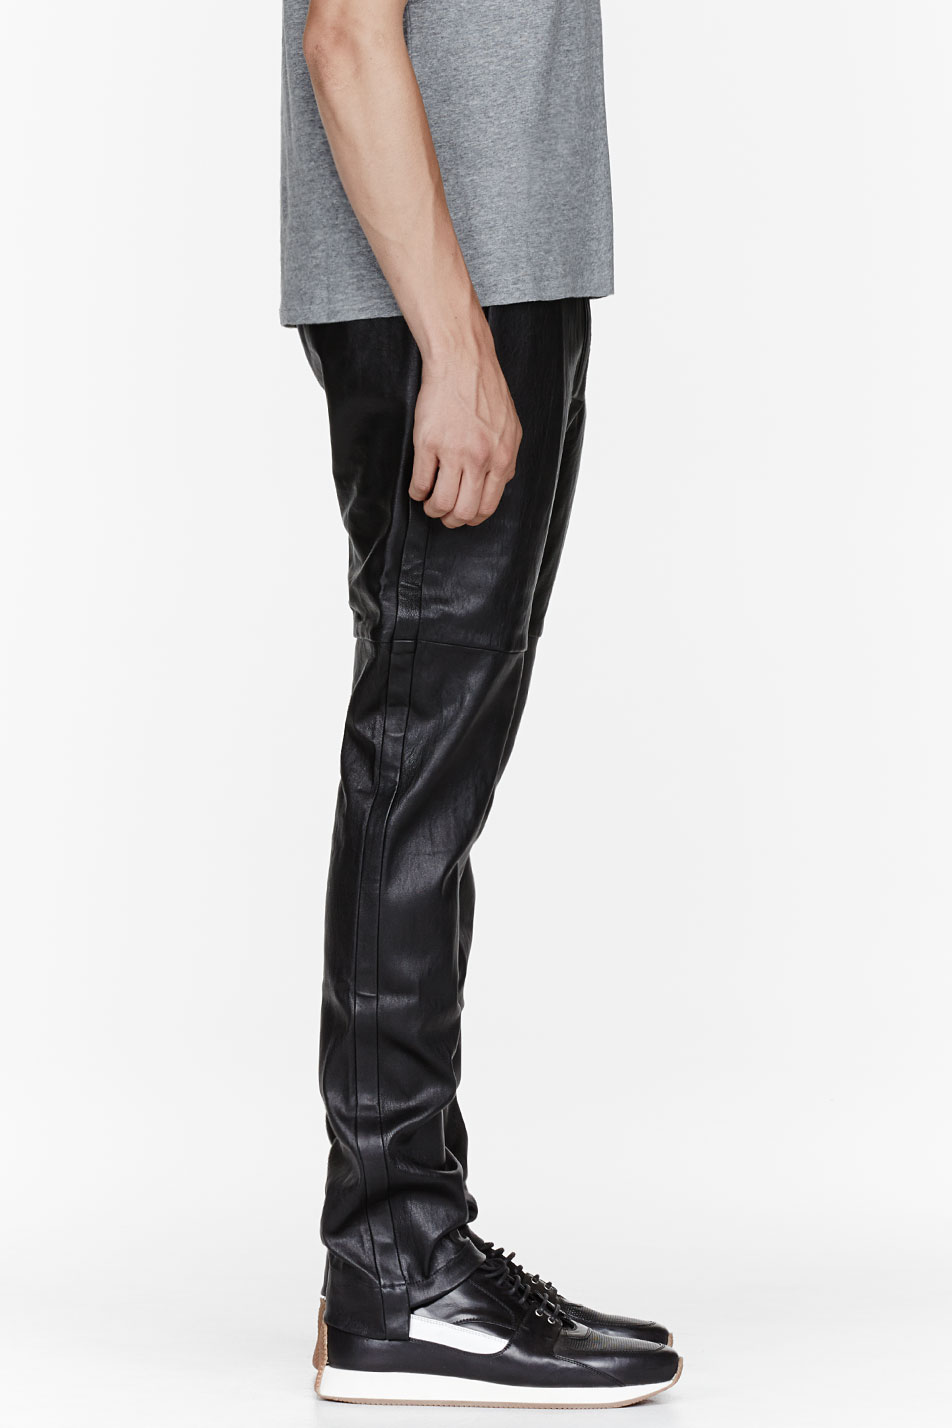 Black Leather Tuxedo pants menswear fashion